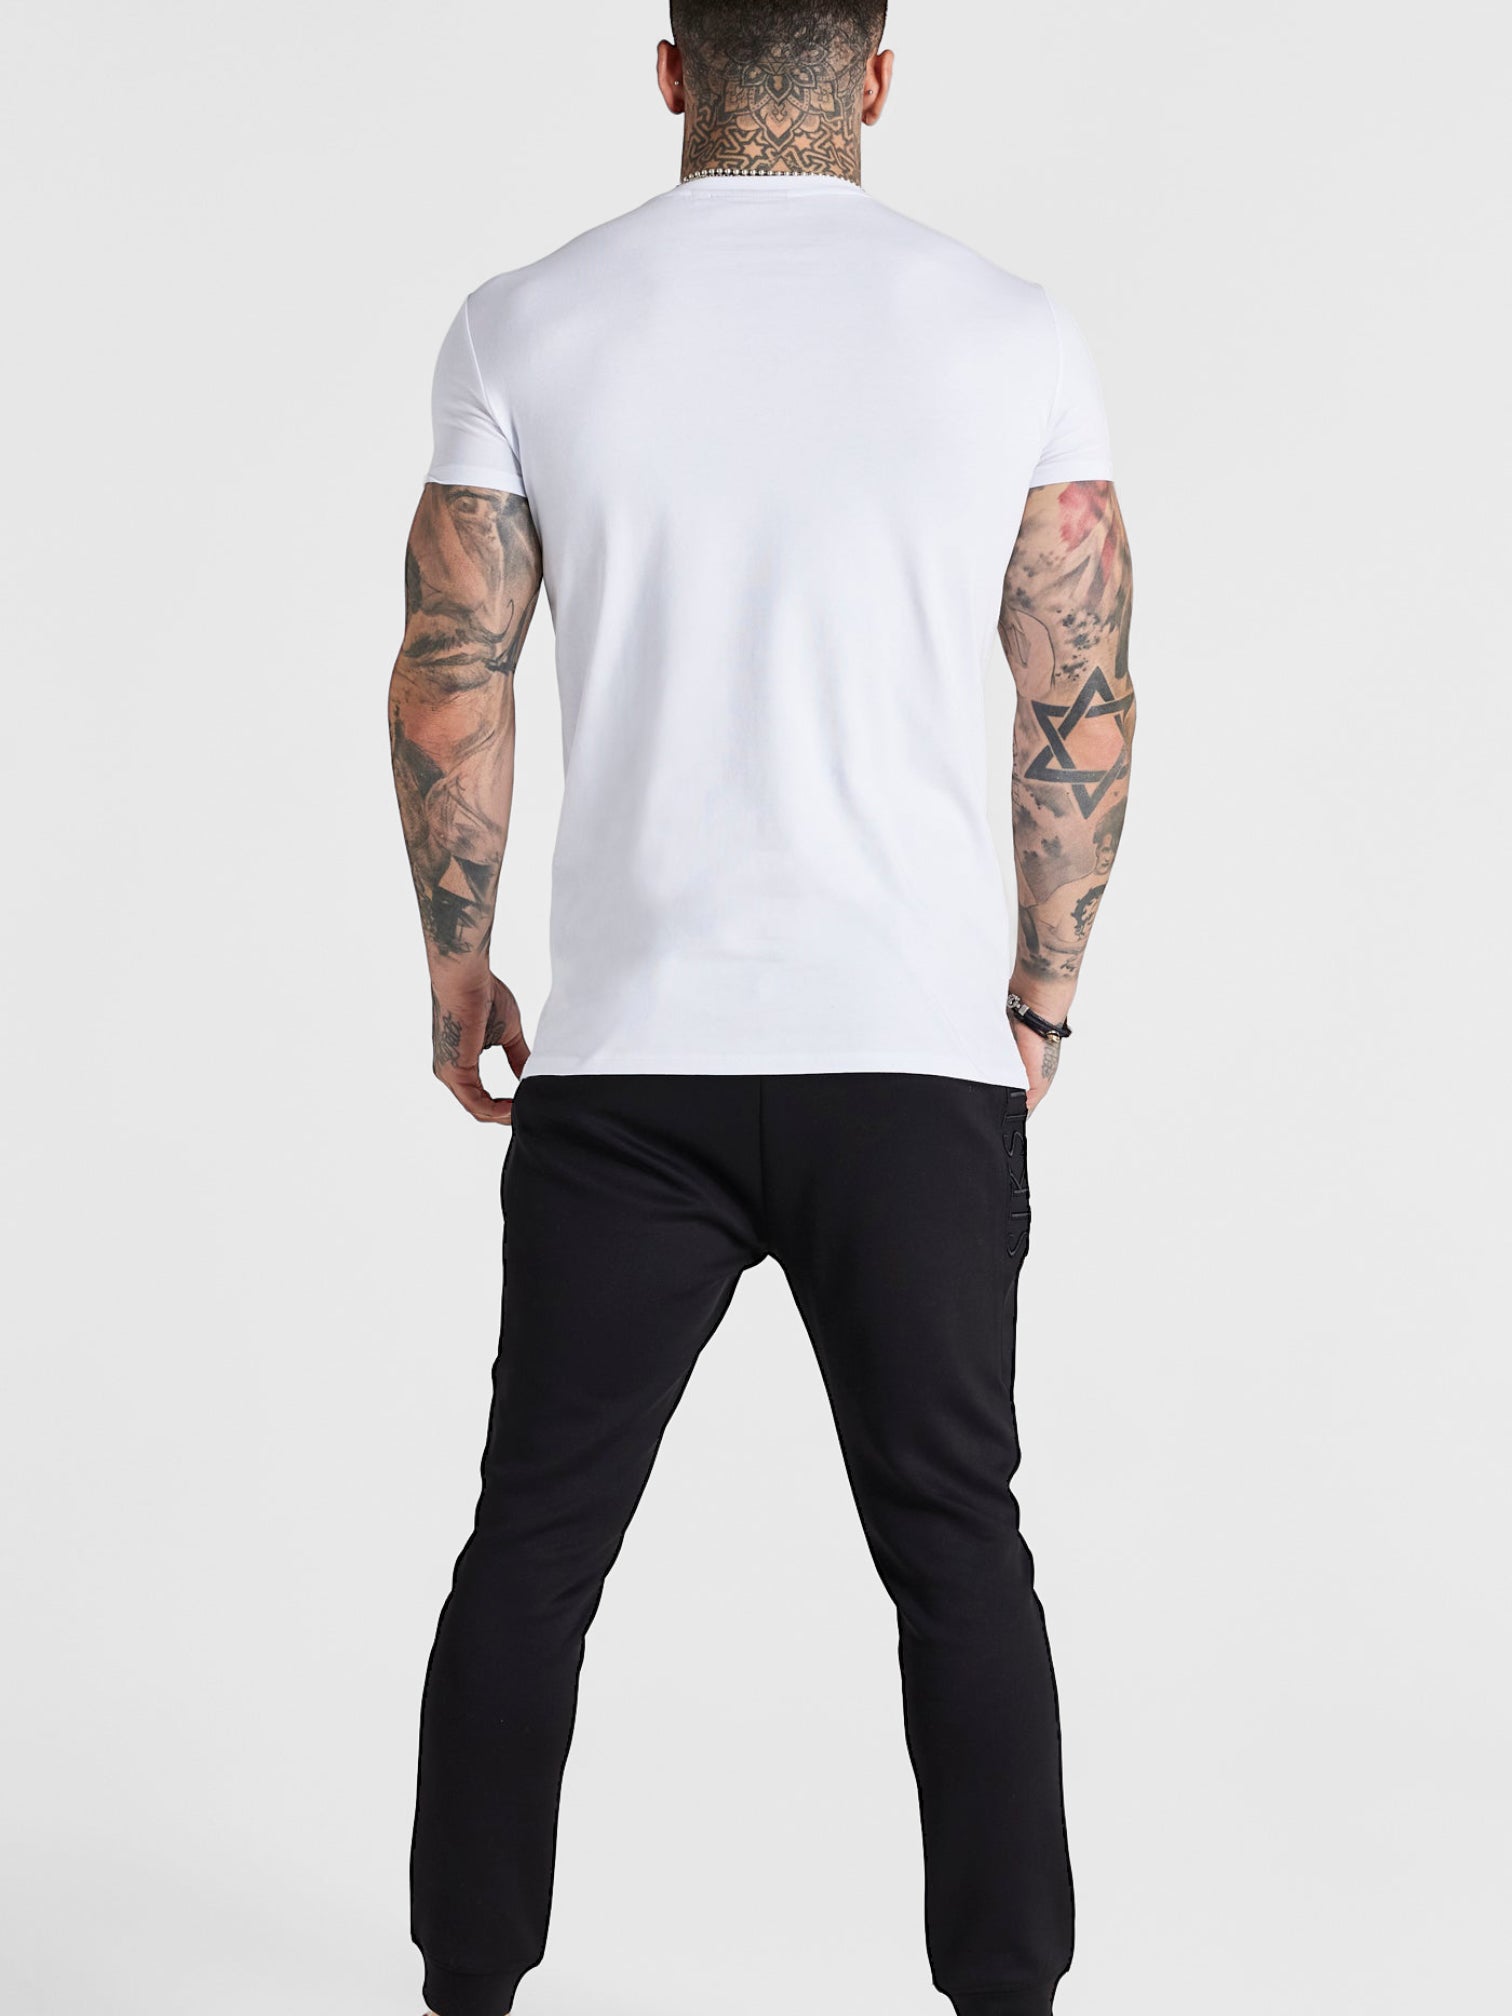 Siksilk - T-shirt MUSCLE FIT blanc